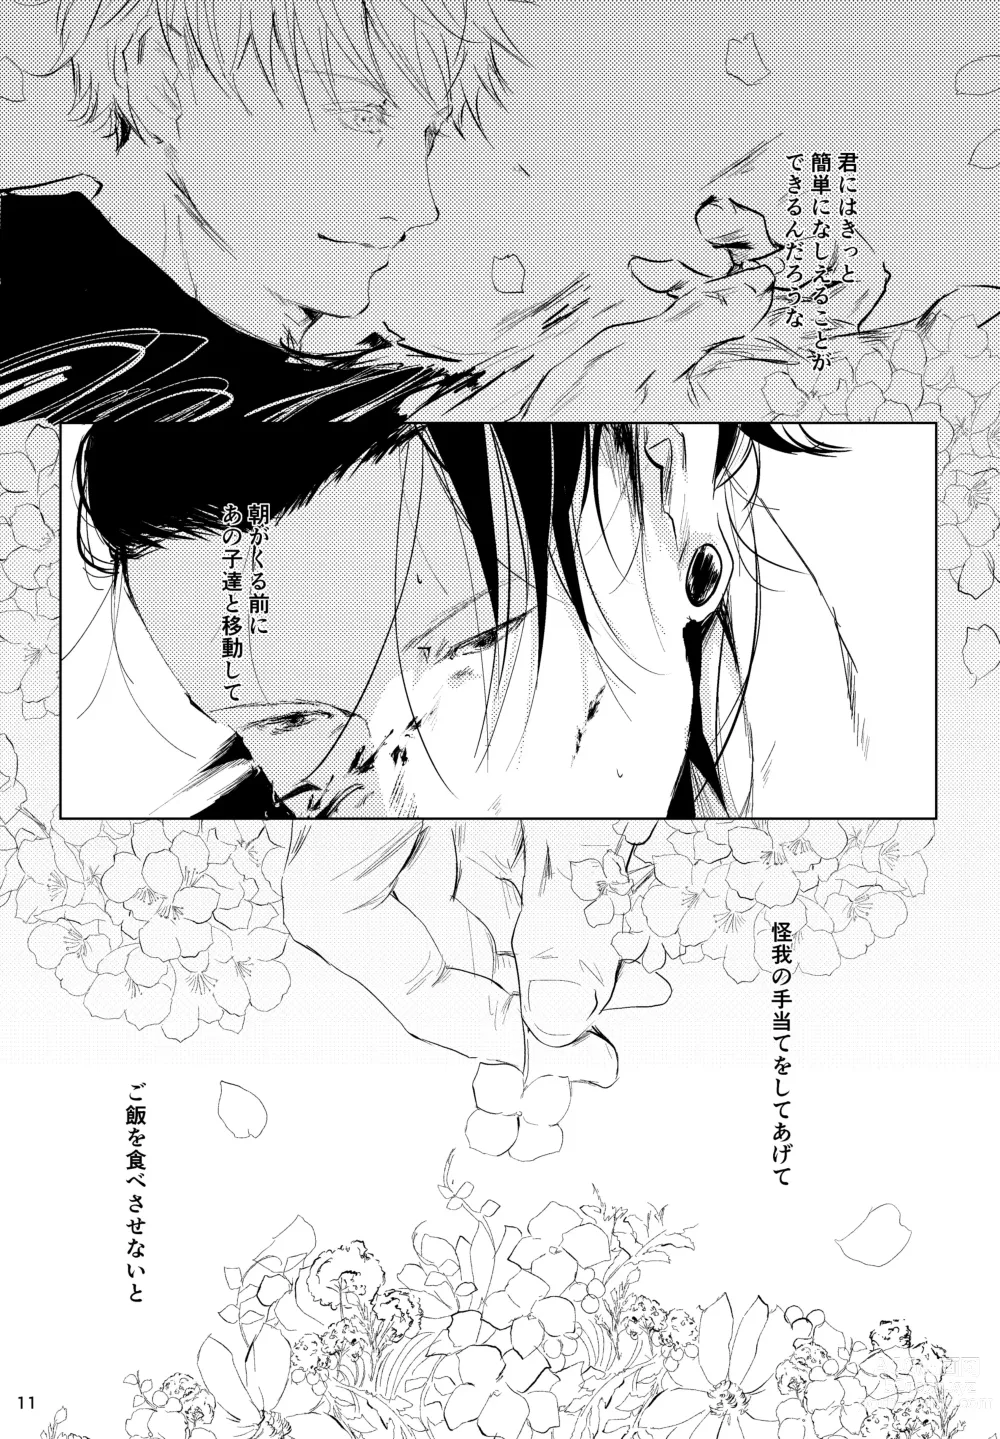 Page 10 of doujinshi Hana kanmuri